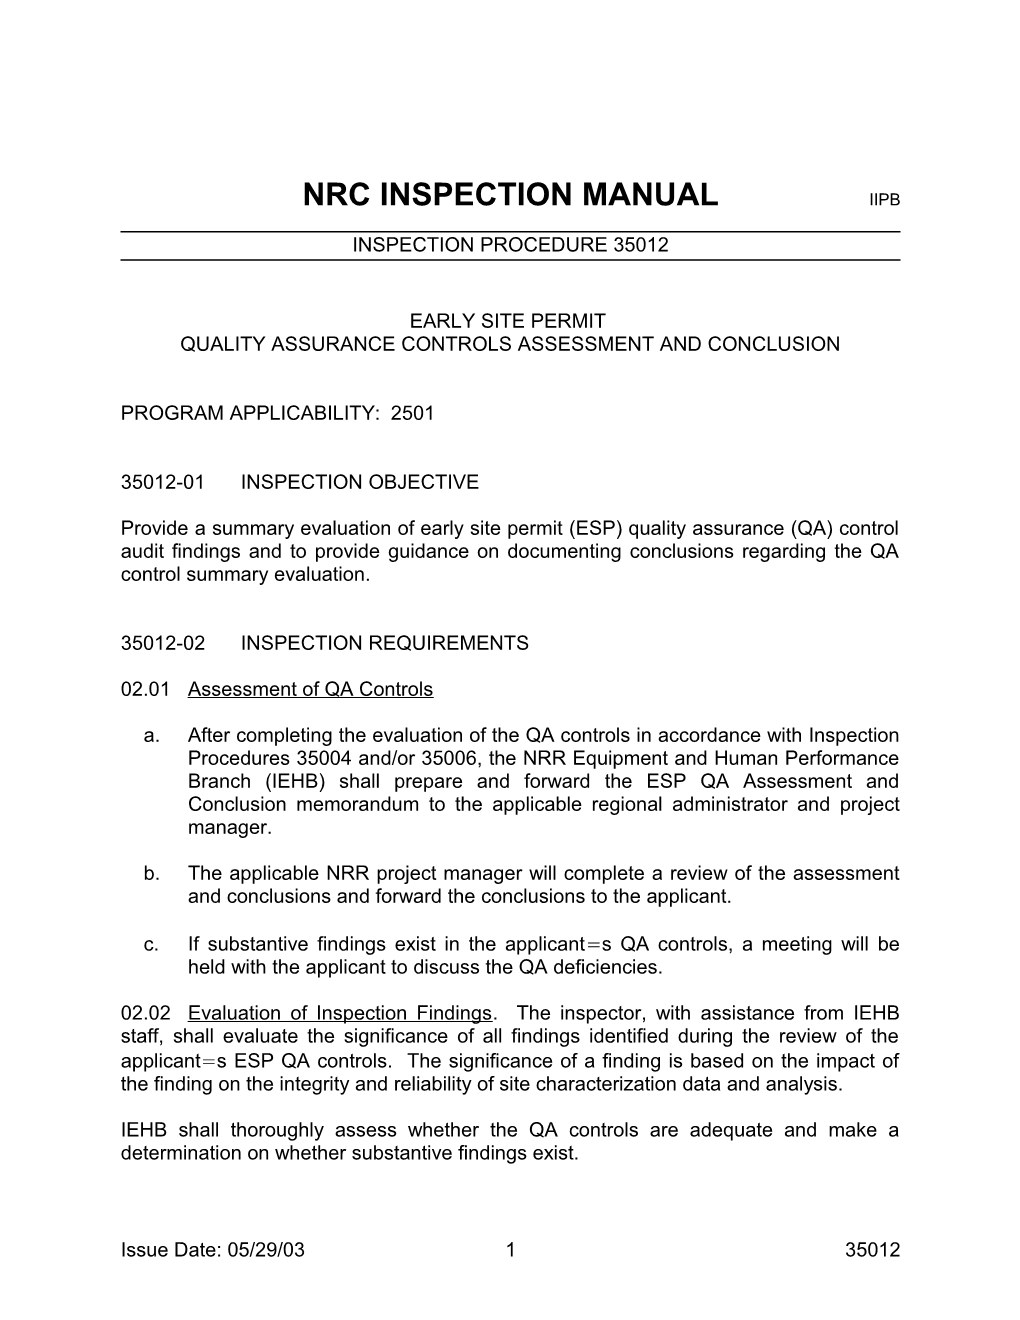 Nrc Inspection Manual Iipb s1